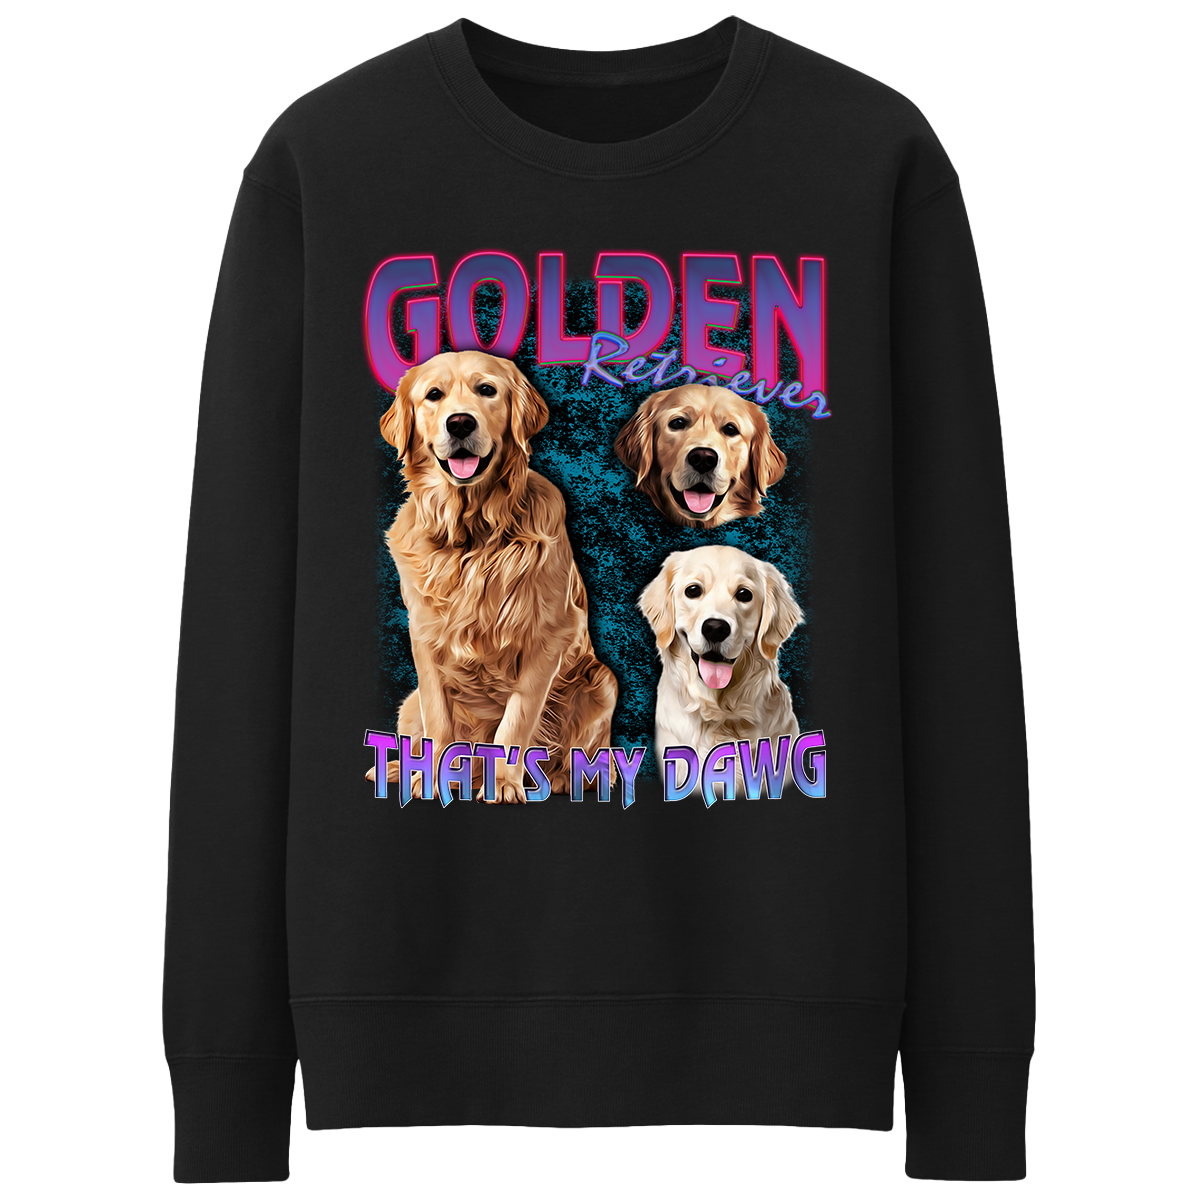 90's Style Golden Retriever Crewneck Sweaters